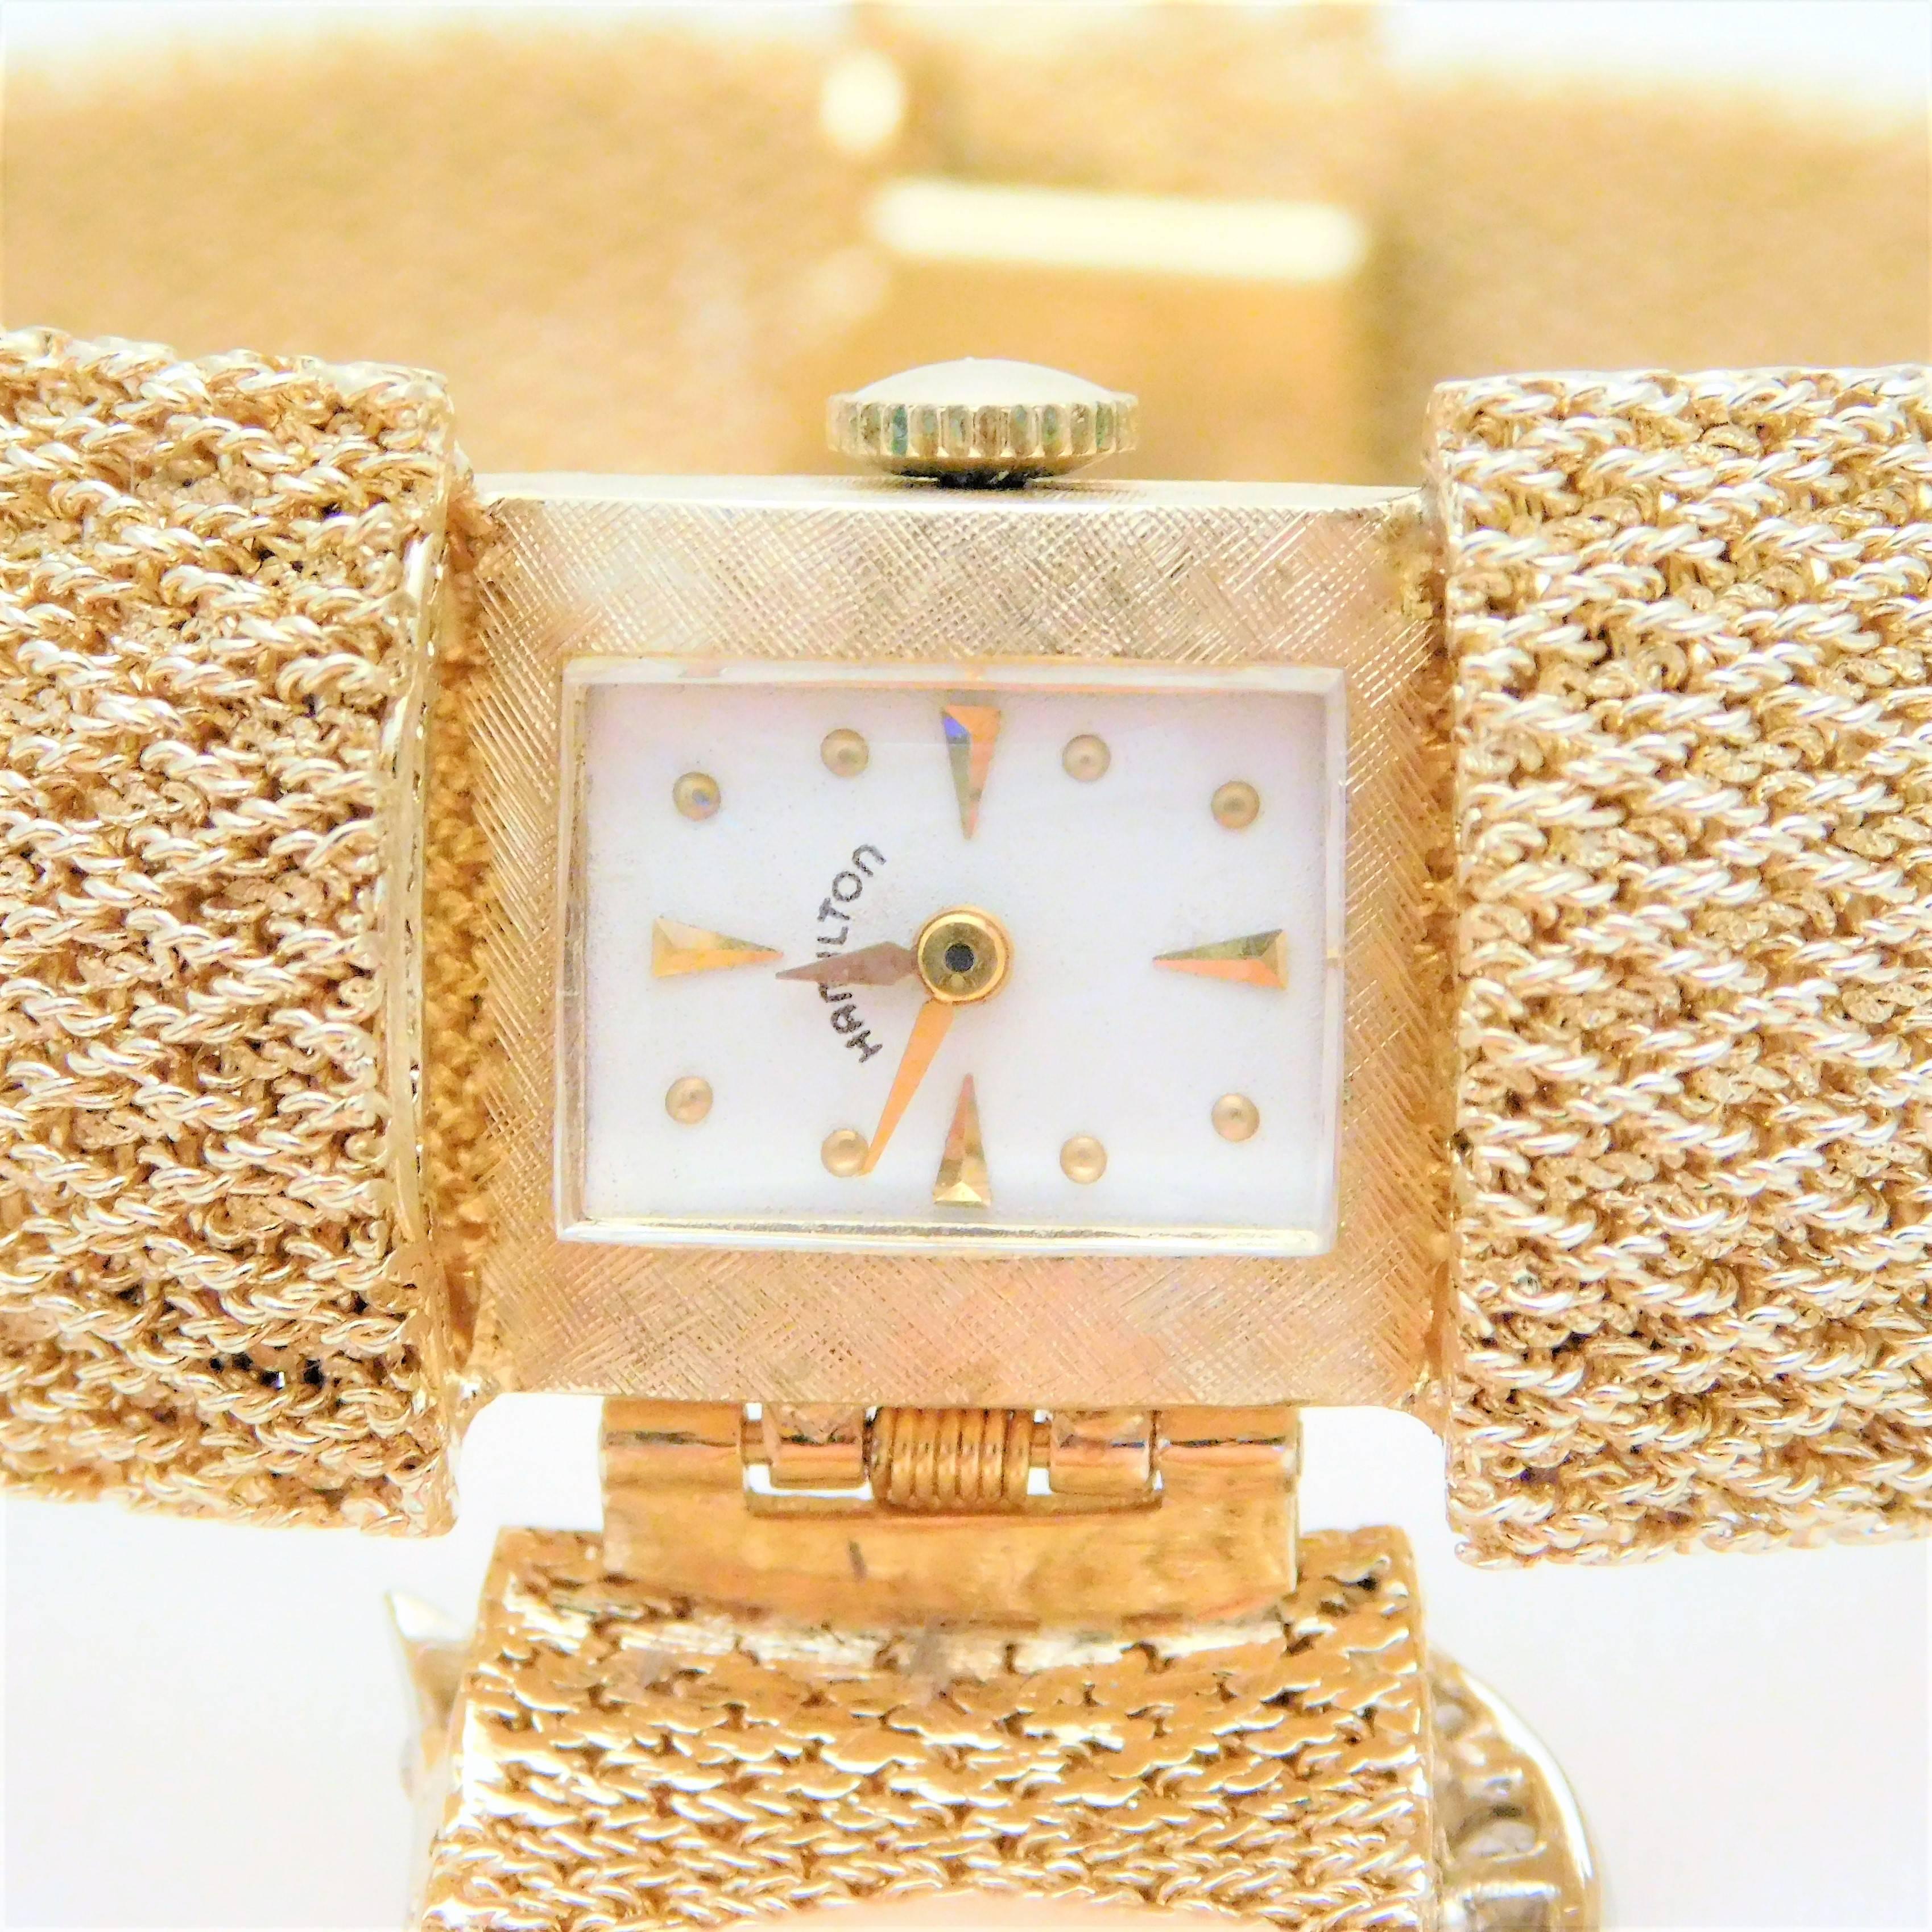 Hamilton Ladies Yellow Gold Diamond “Peek-a-boo” Manual Wristwatch, circa 1955 For Sale 2